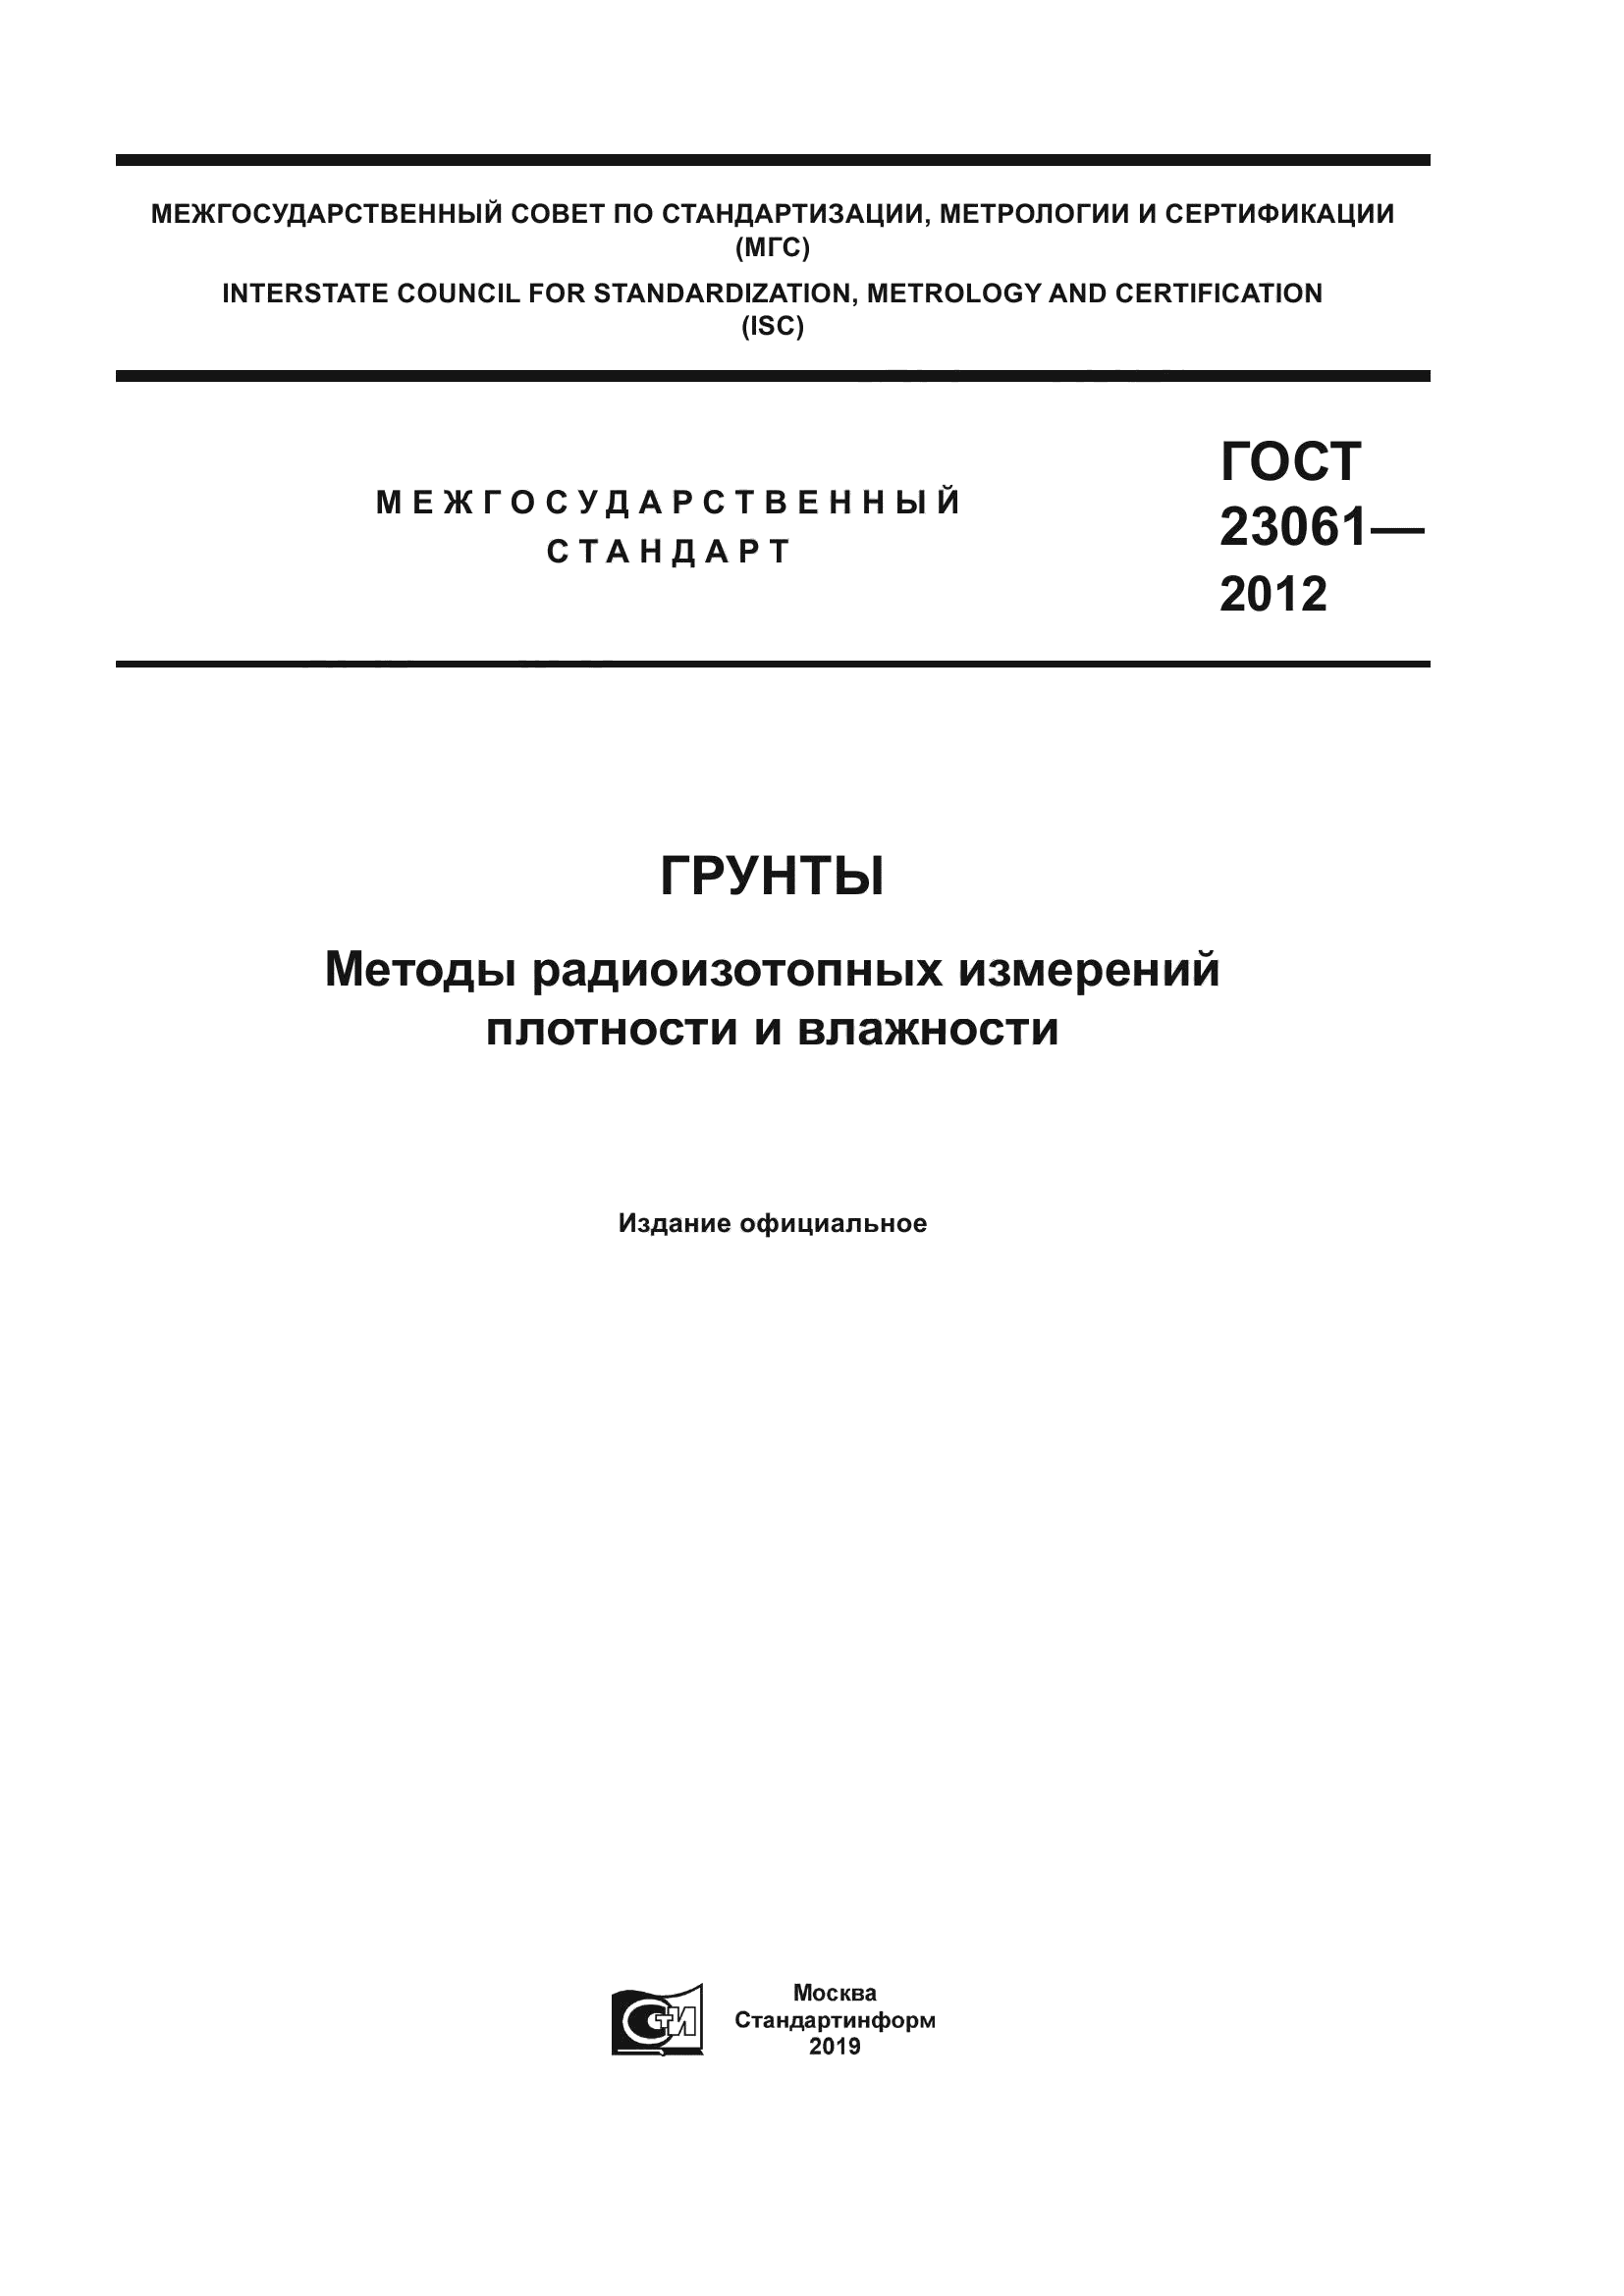 ГОСТ 23061-2012